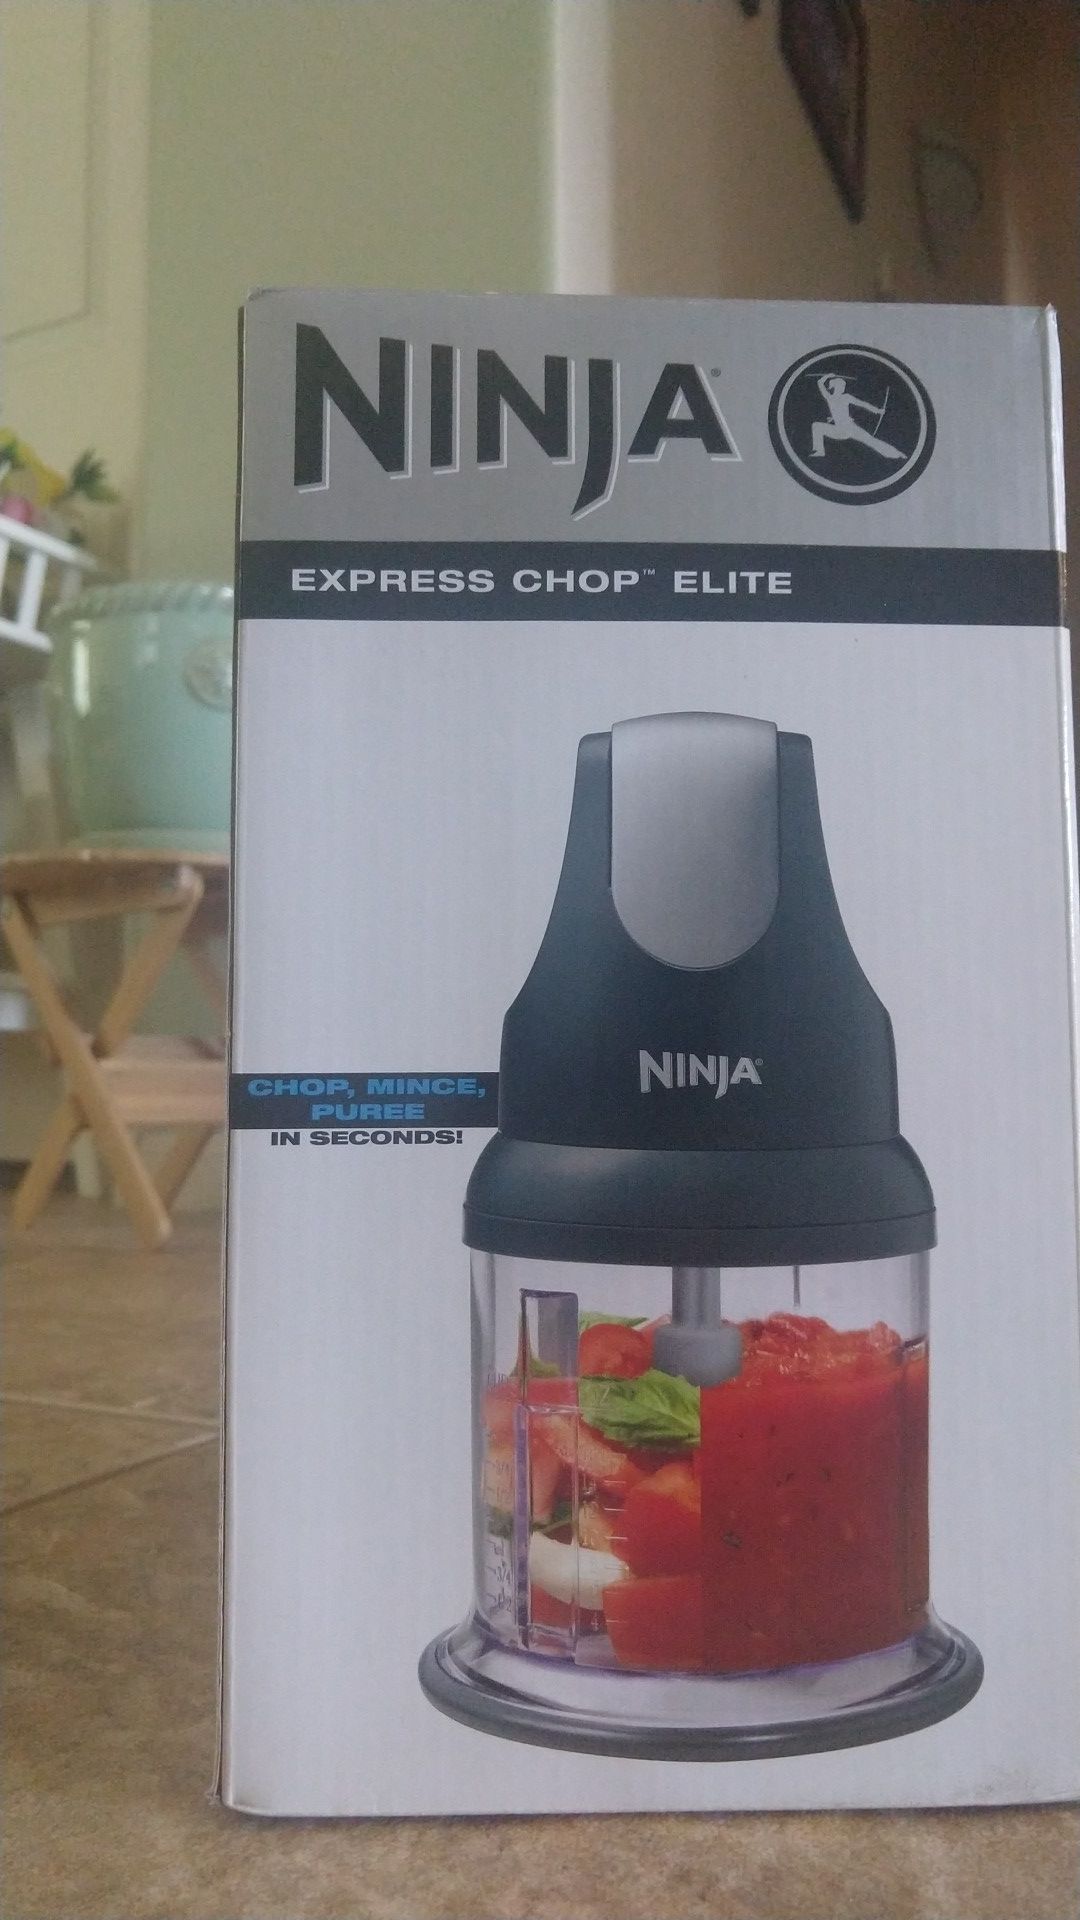 New Ninja express chop elite blender